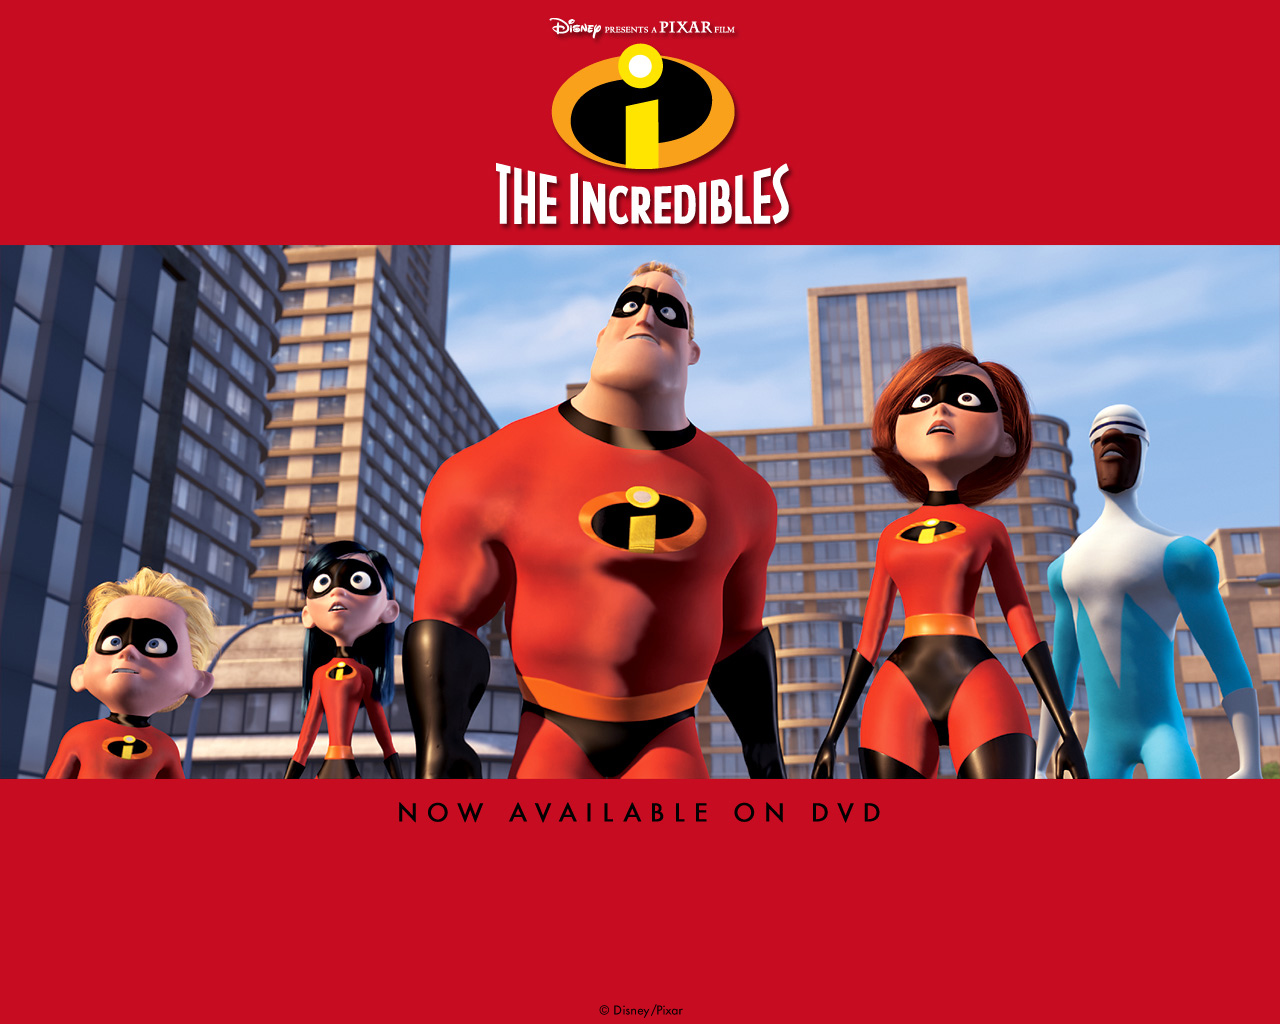 "The Incredibles" desktop wallpaper number 2 (1280 x 1024 pixels)